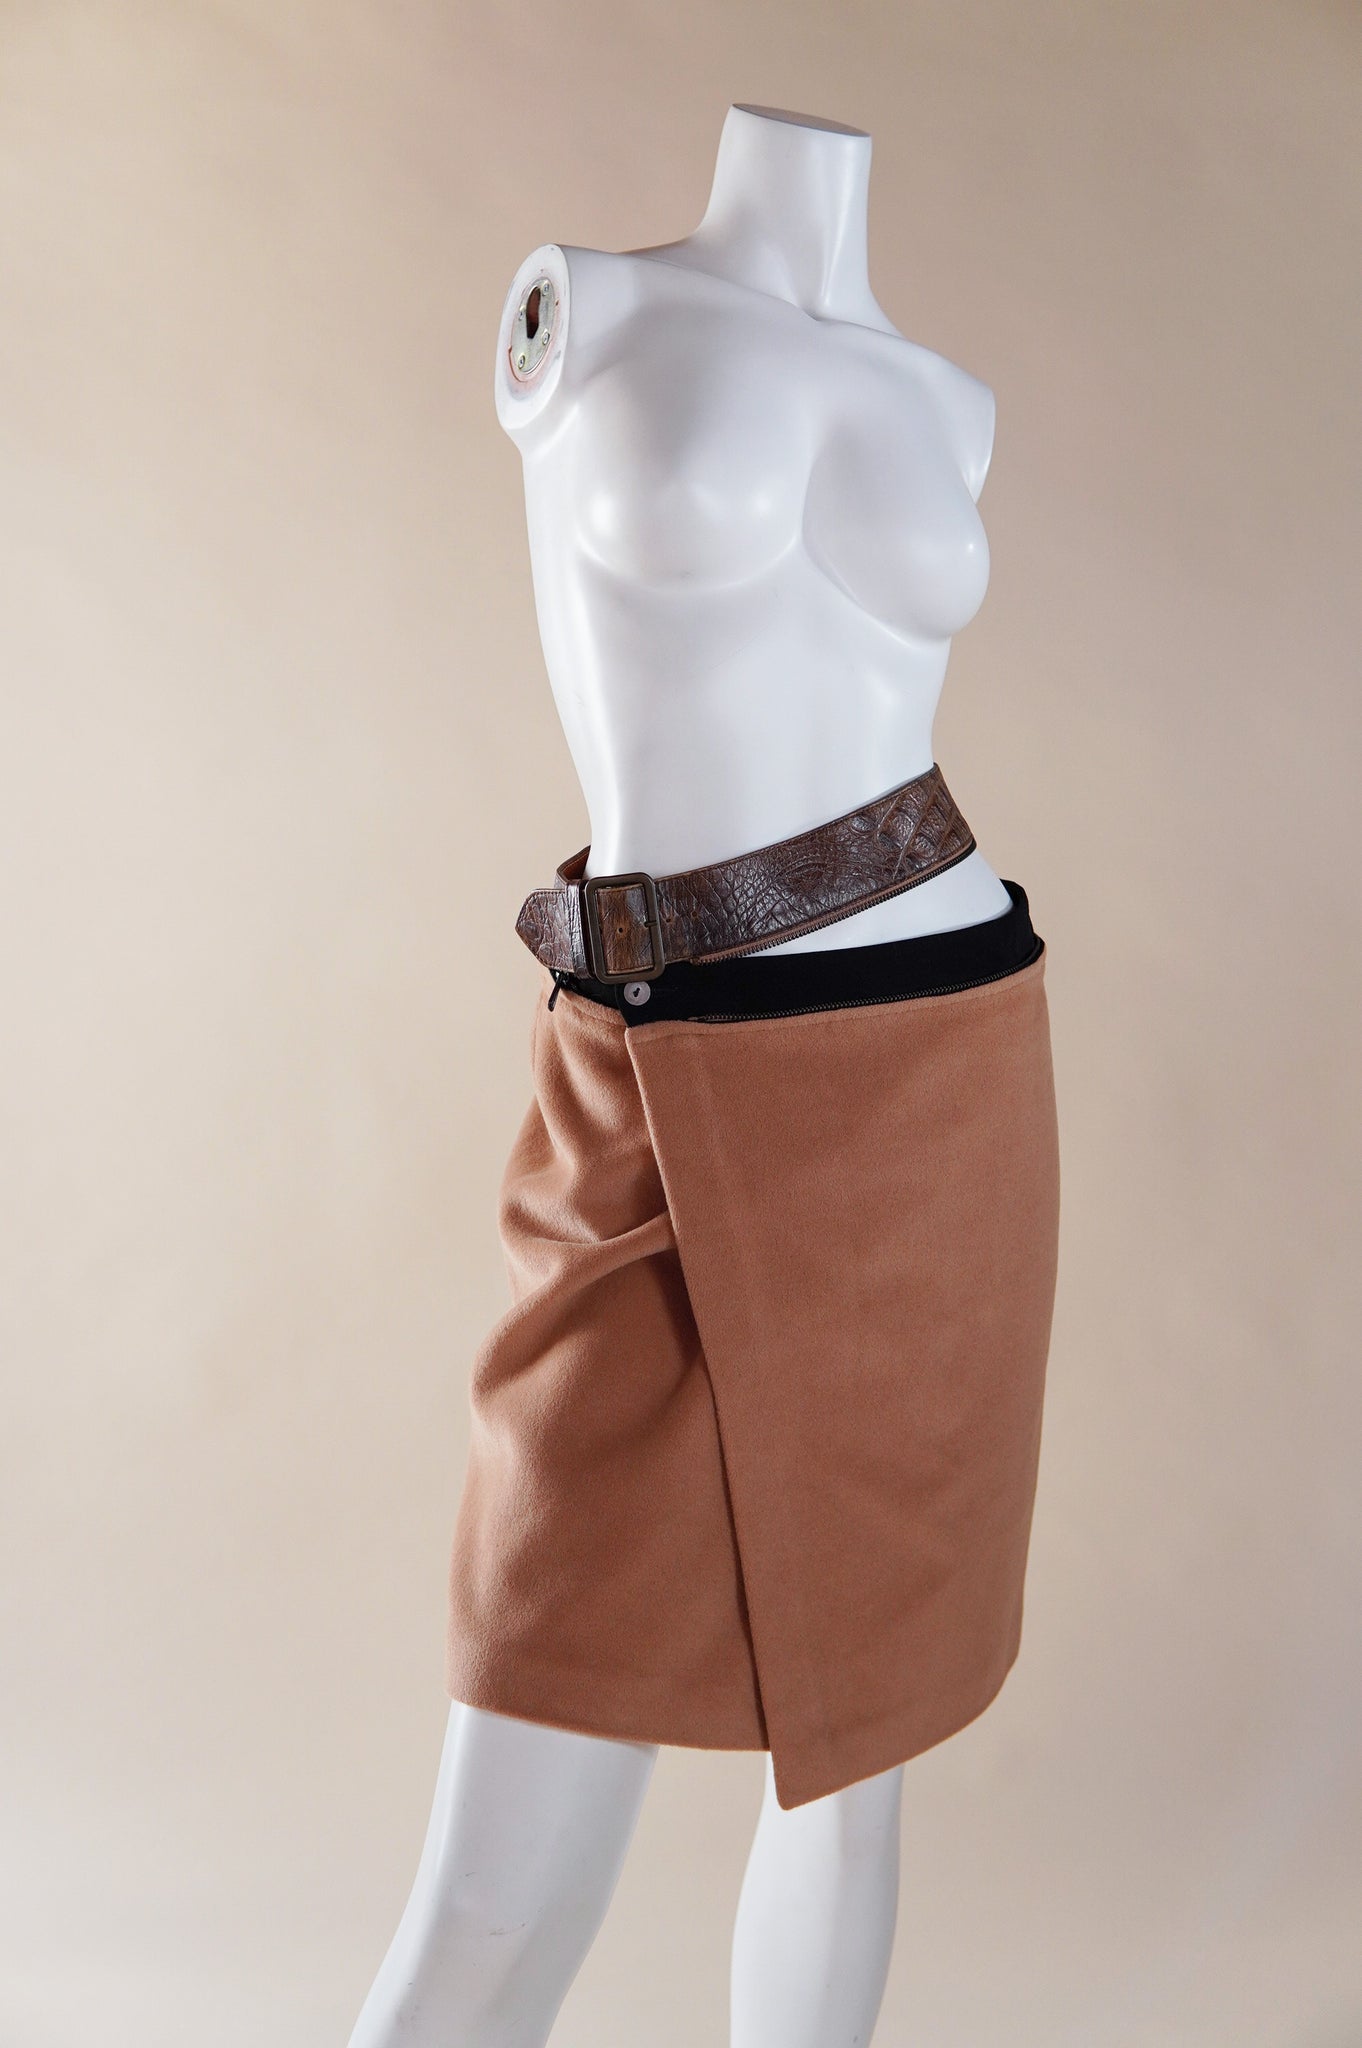 S/S 2000 Jean Paul Gaultier angora wool skirt with detachable belt - S/M